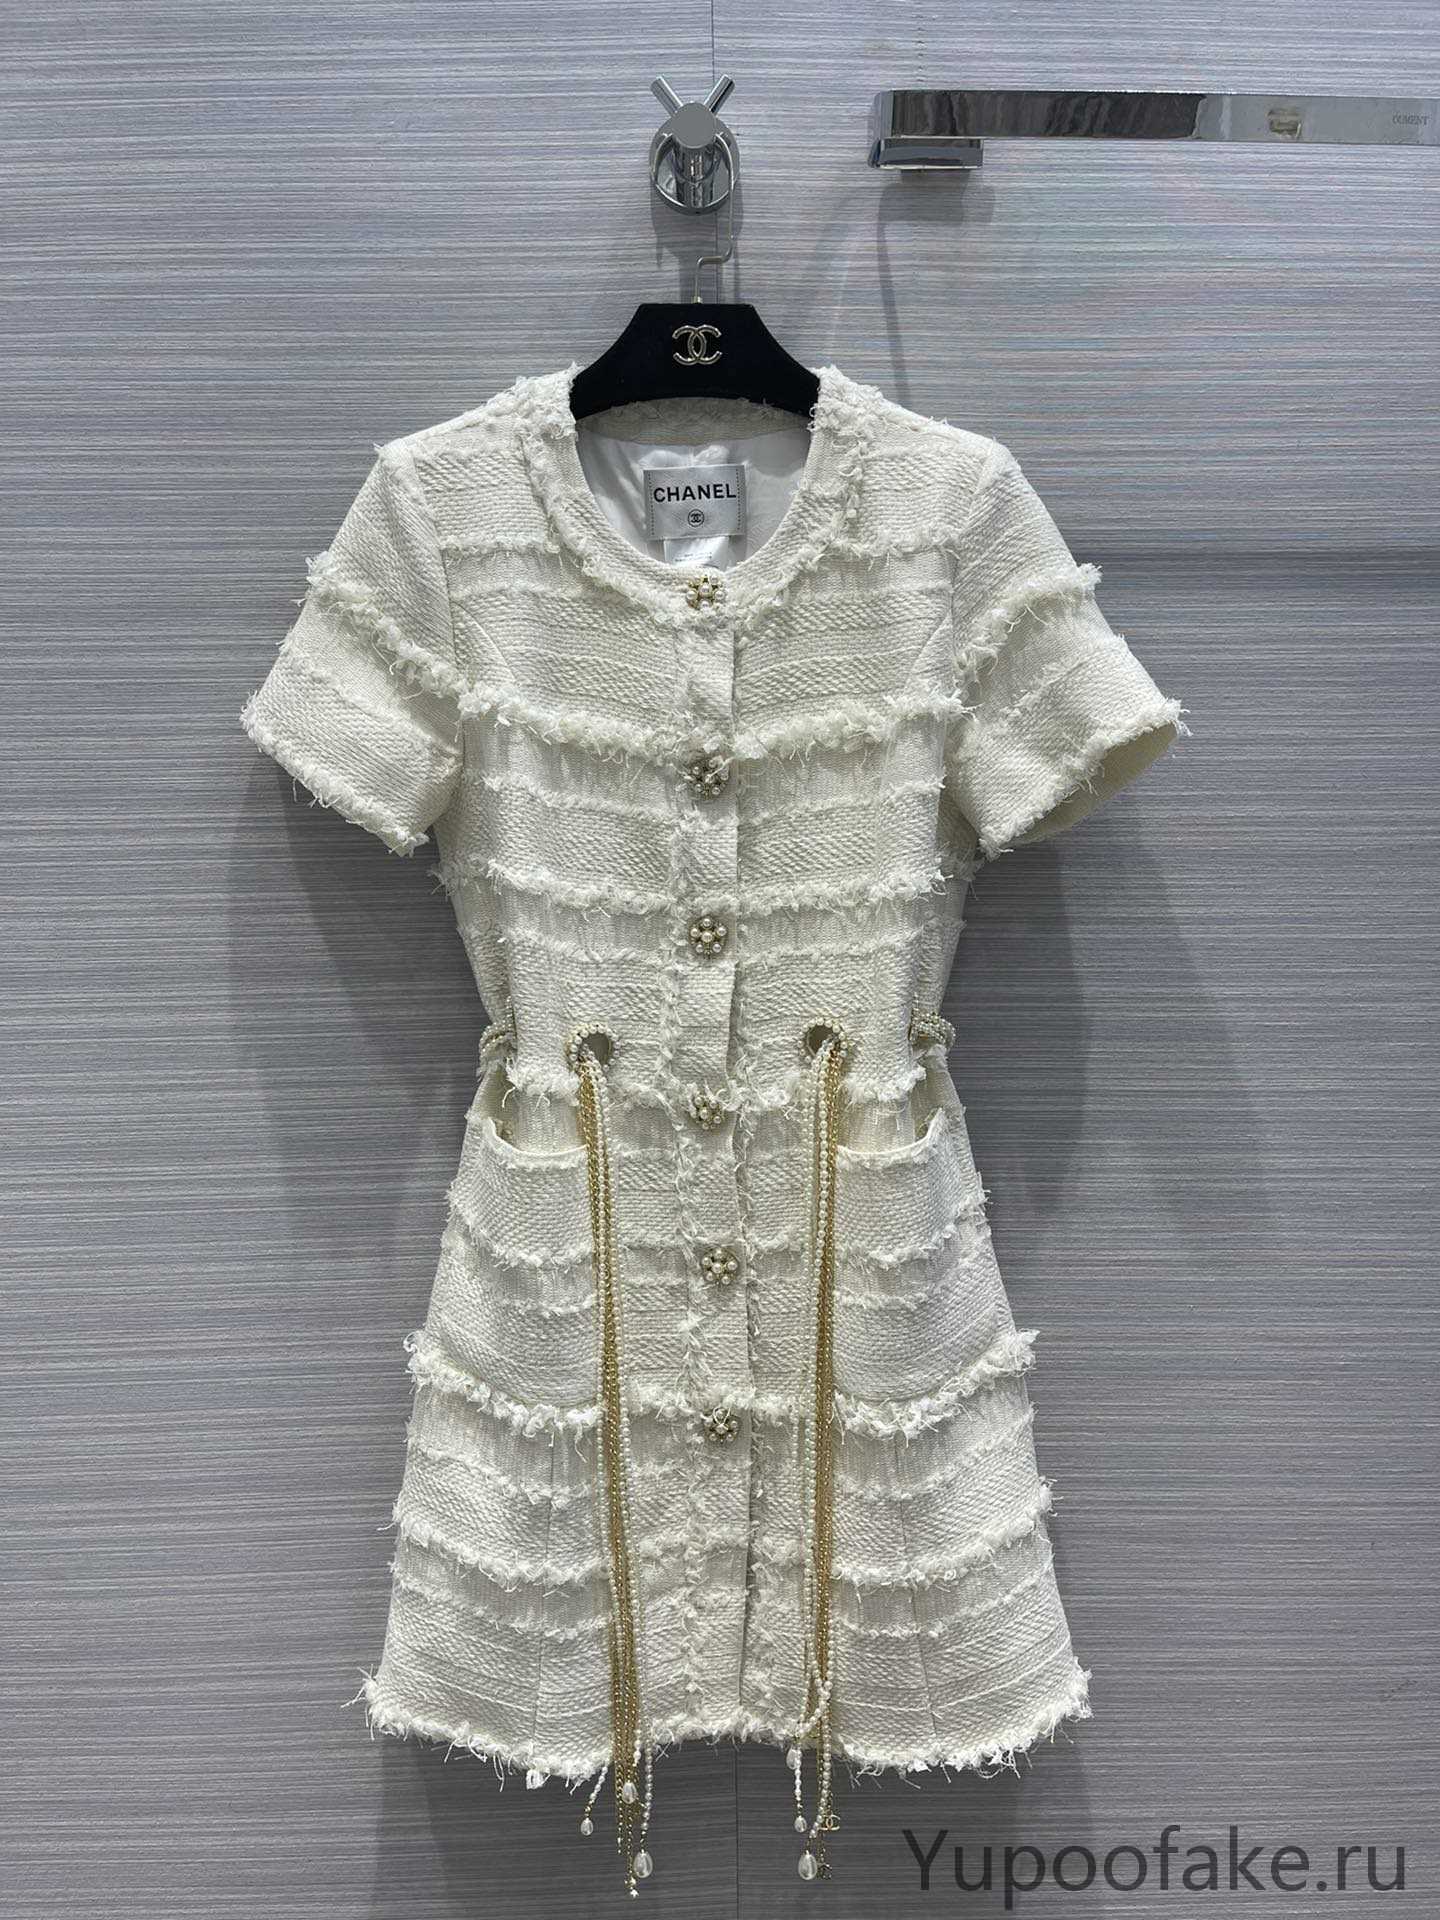 Chanel Clothing Dresses Online From China Designer White Weave Vintage